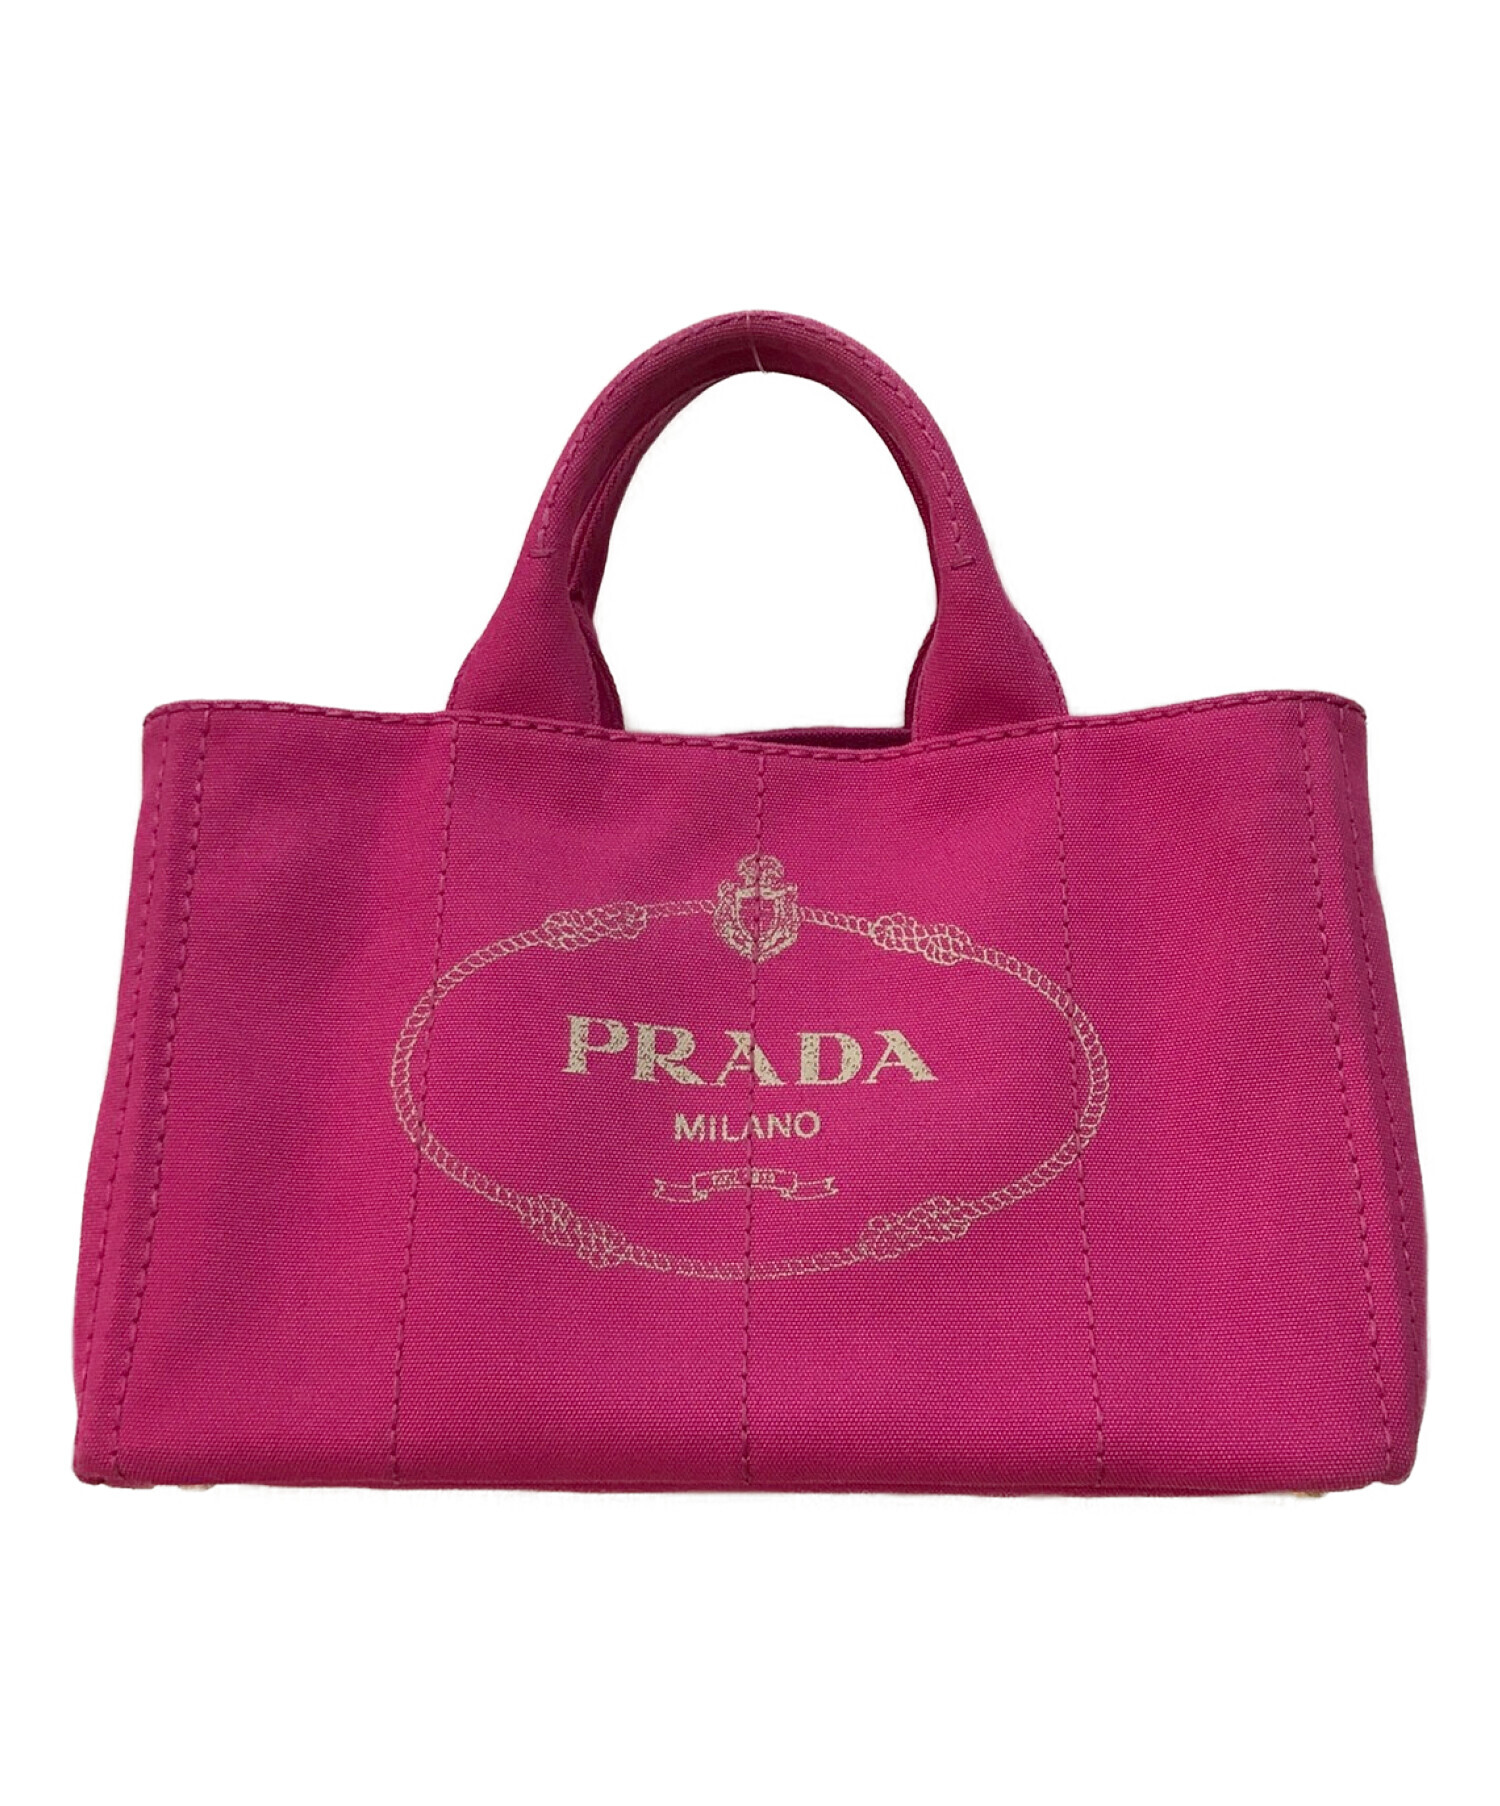 PRADA プラダ カナパ ピンク - トートバッグ